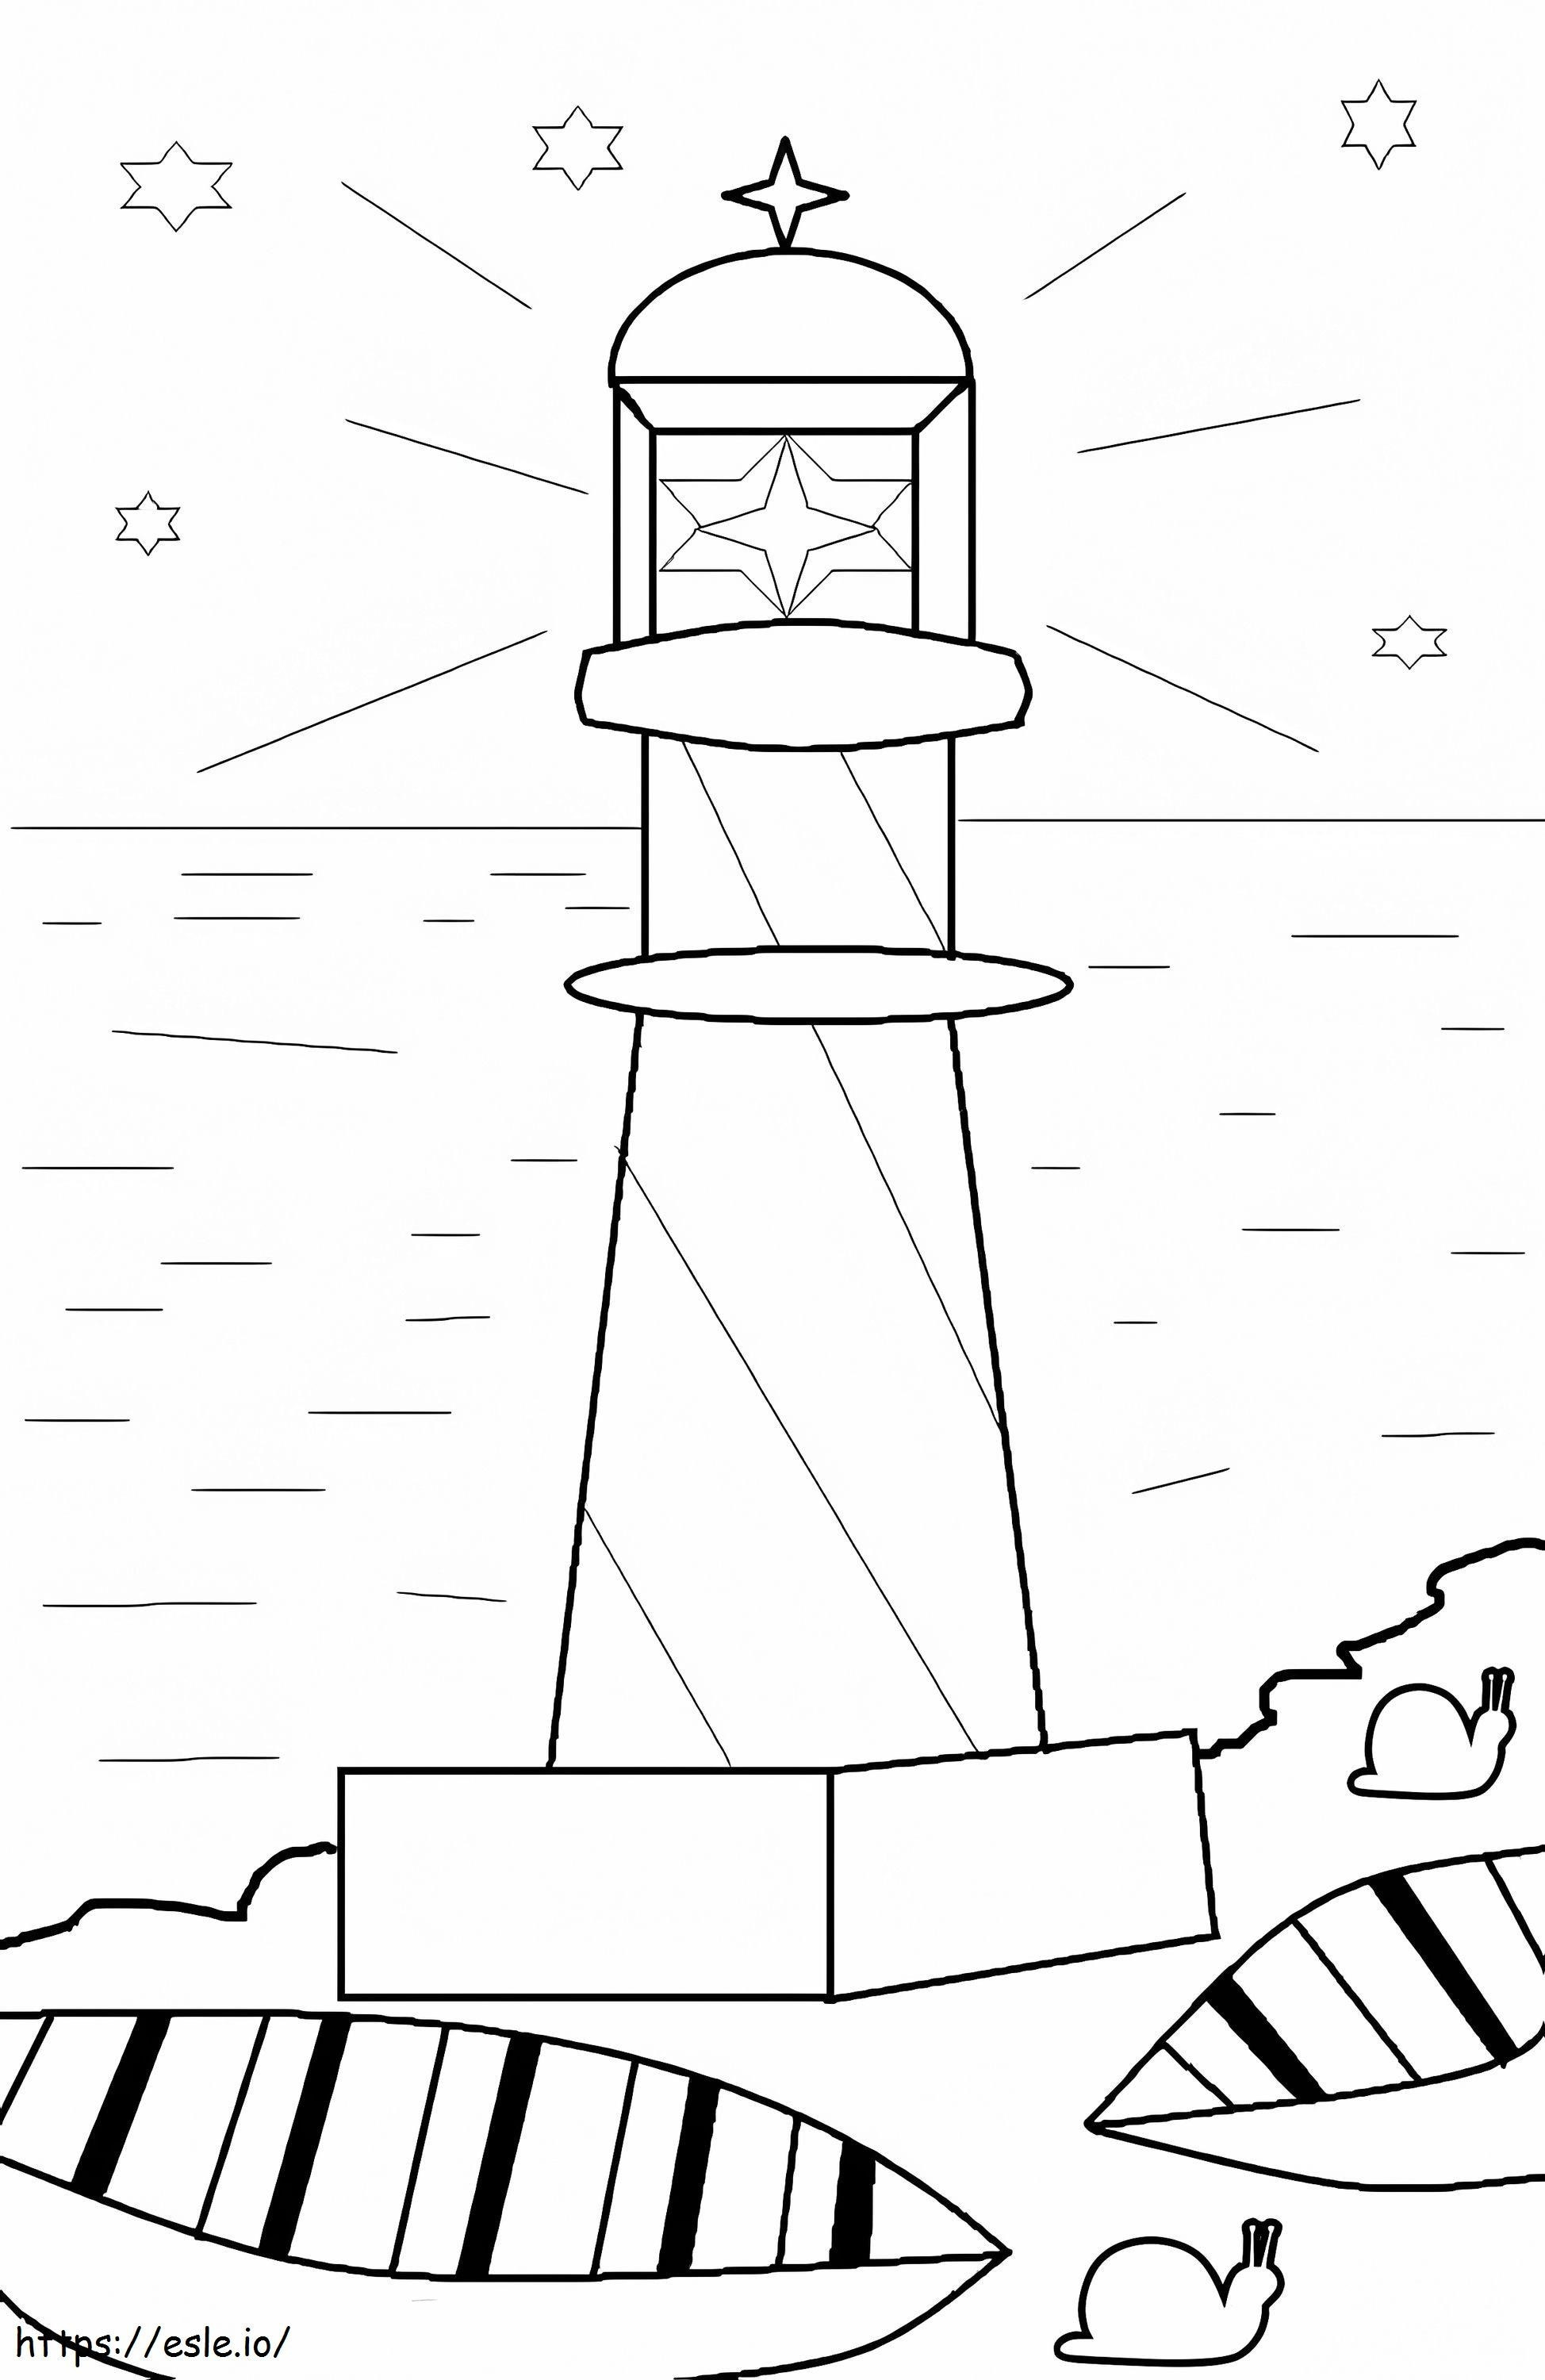 Normaler Leuchtturm 3 ausmalbilder